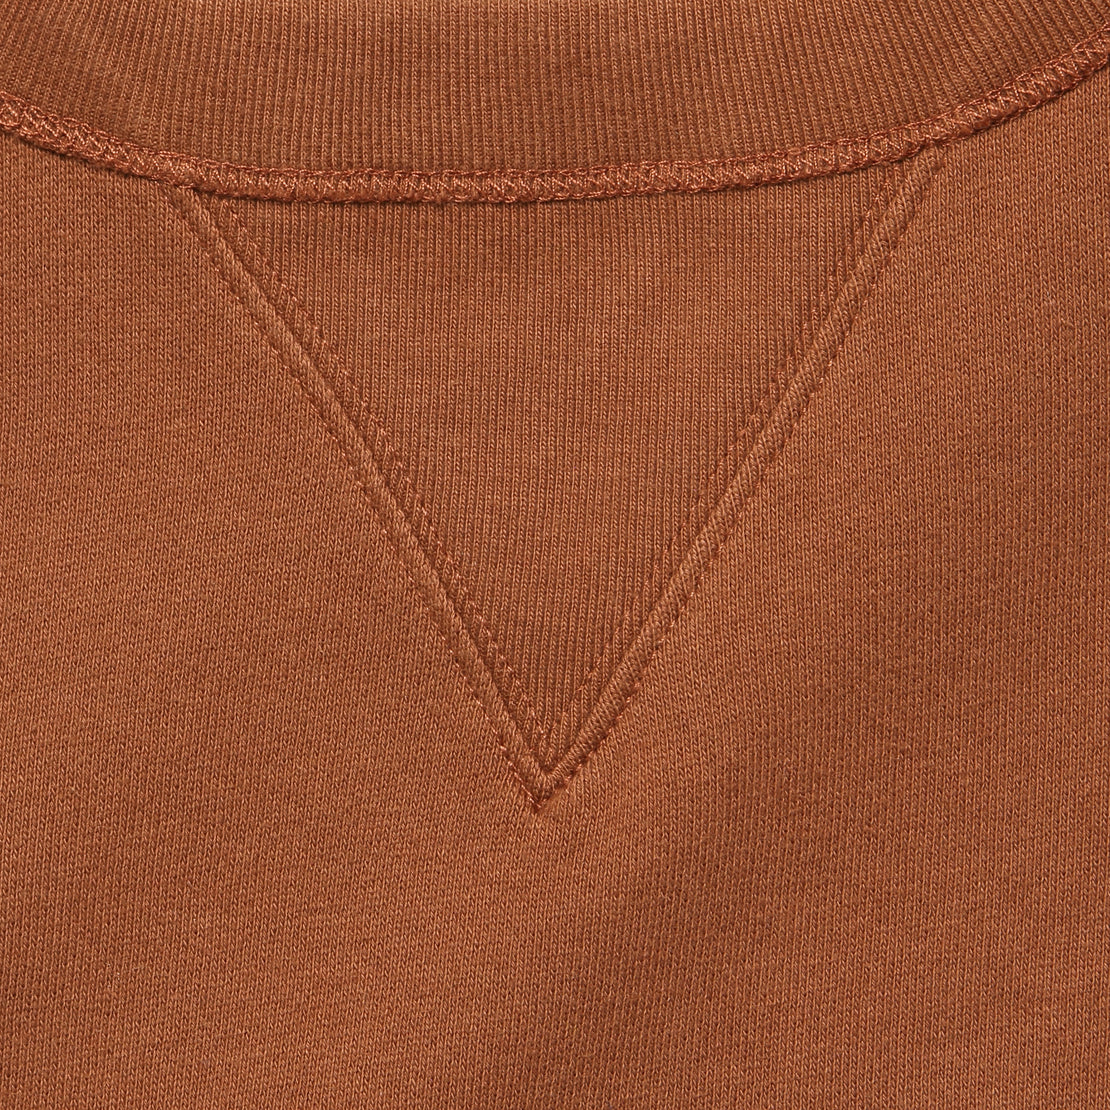 Bay Meadows Sweatshirt - Tortoise Shell - Levis Vintage Clothing - STAG Provisions - Tops - Fleece / Sweatshirt